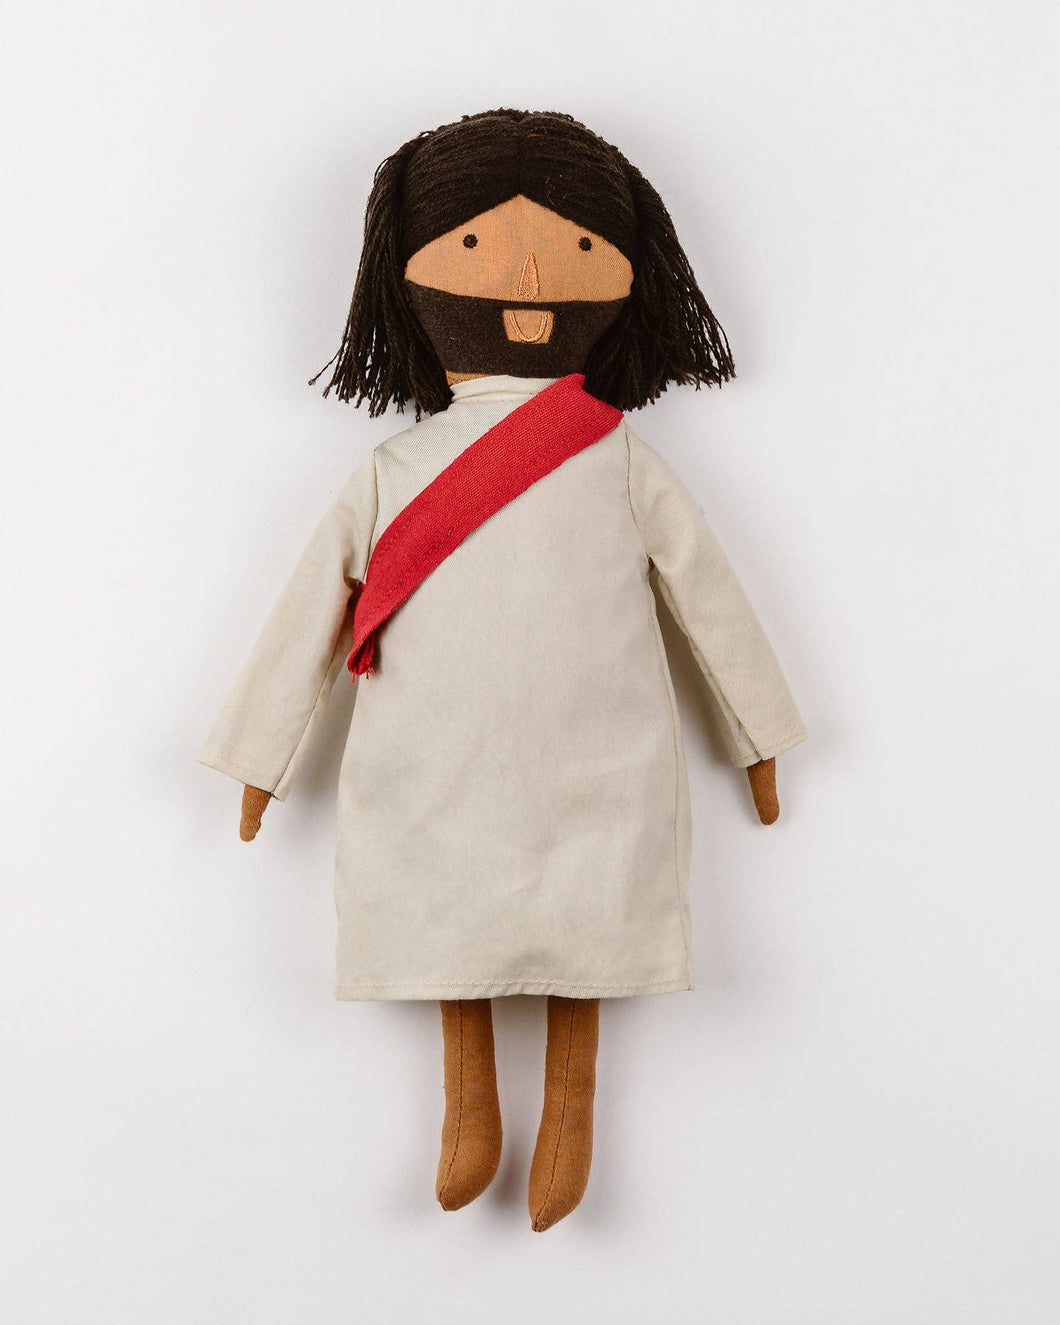 Jesus of Nazareth Doll | Gift | Christian Kids | Catholic